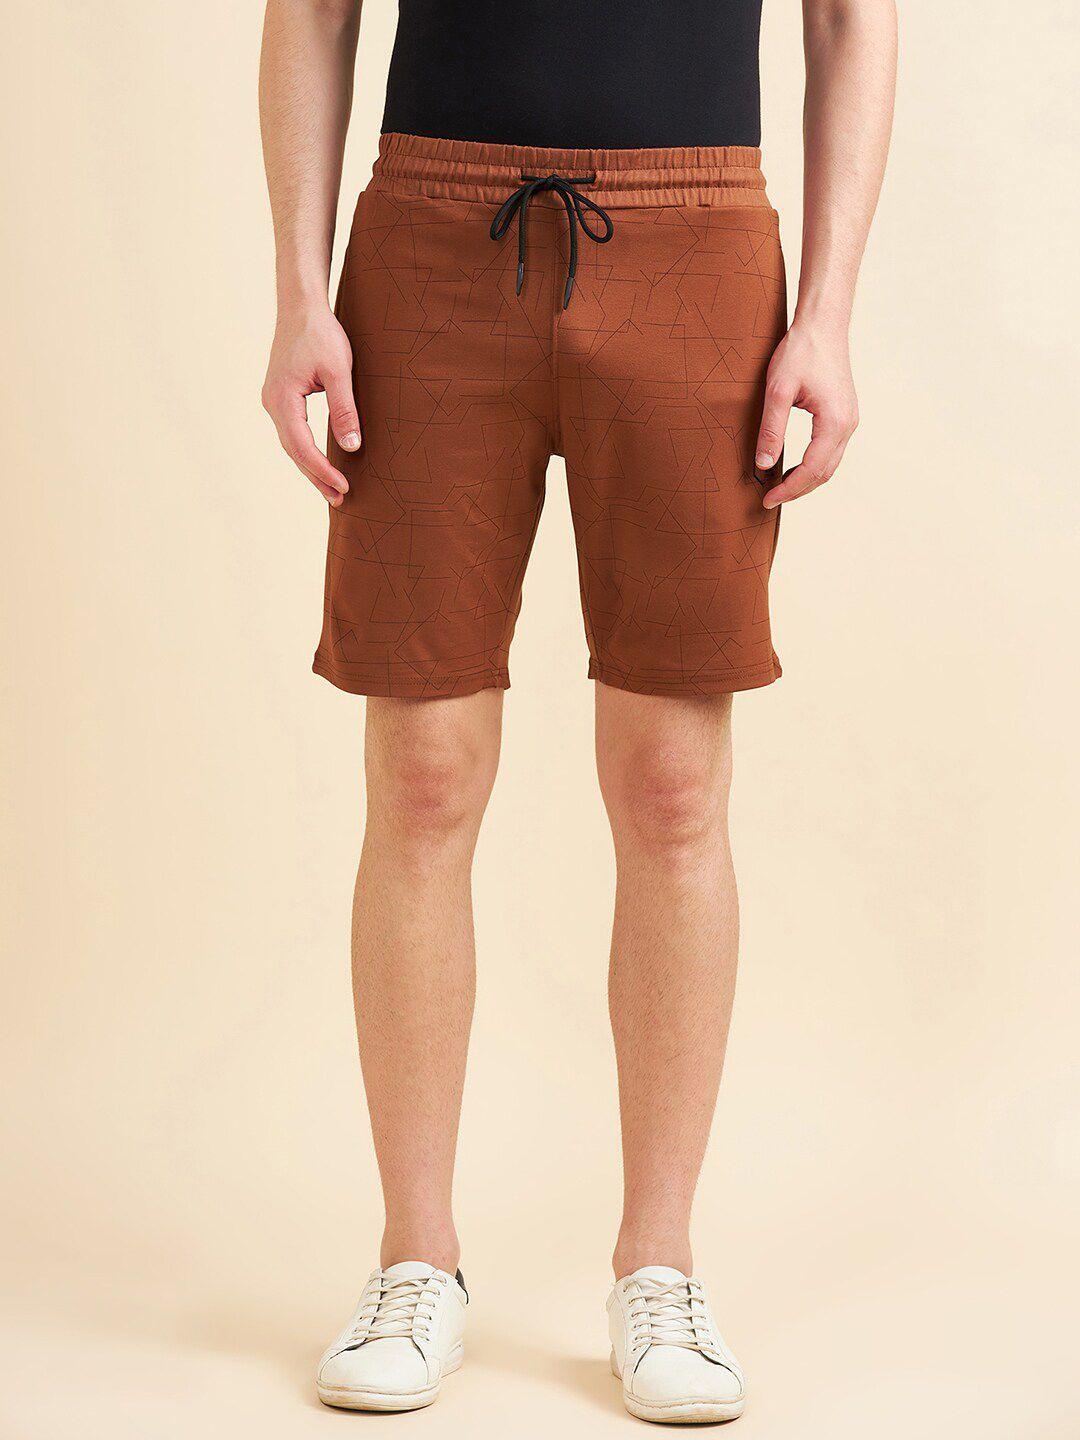 sweet-dreams-men-brown-mid-rise-cotton-shorts